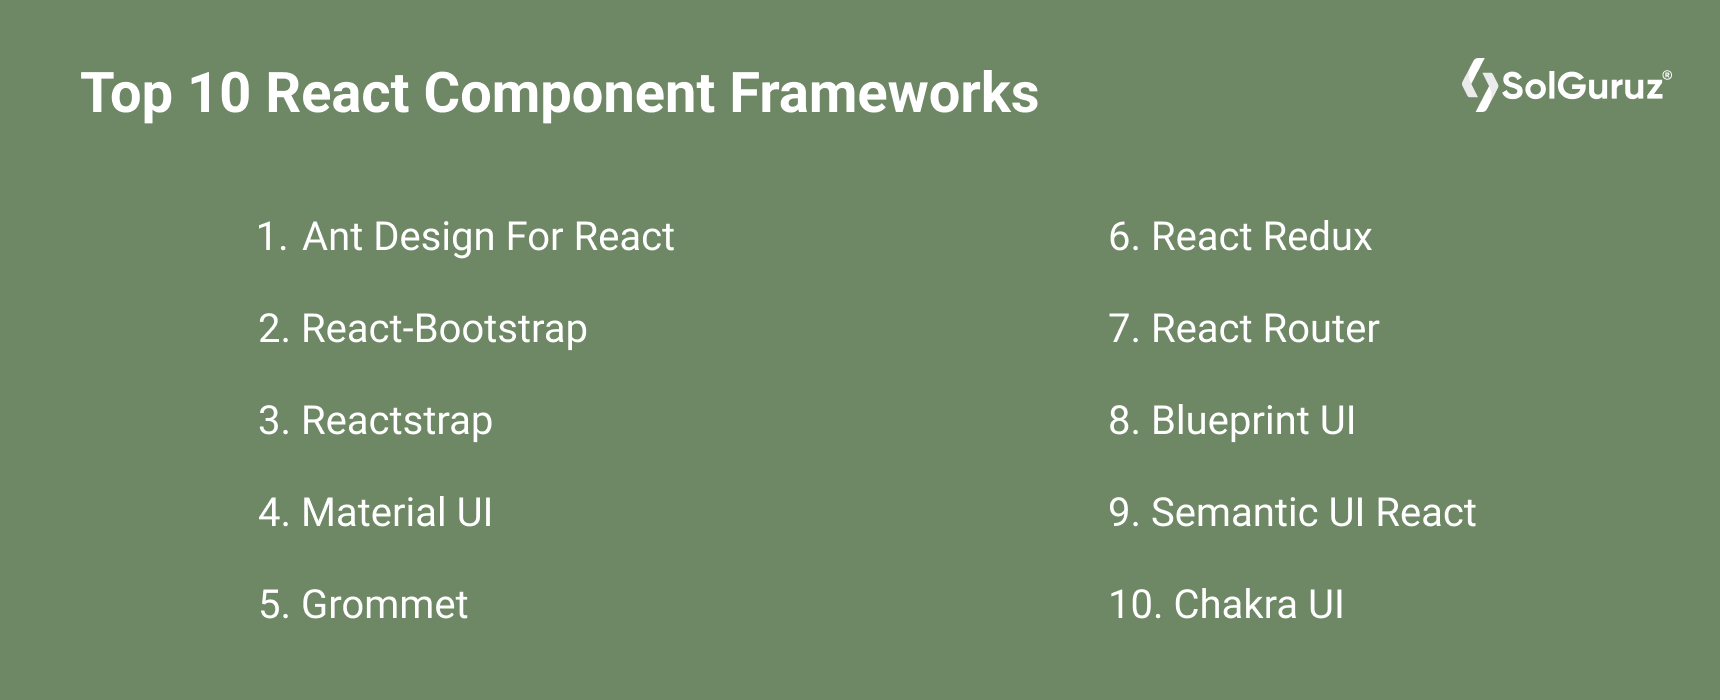 Top React Component Frameworks